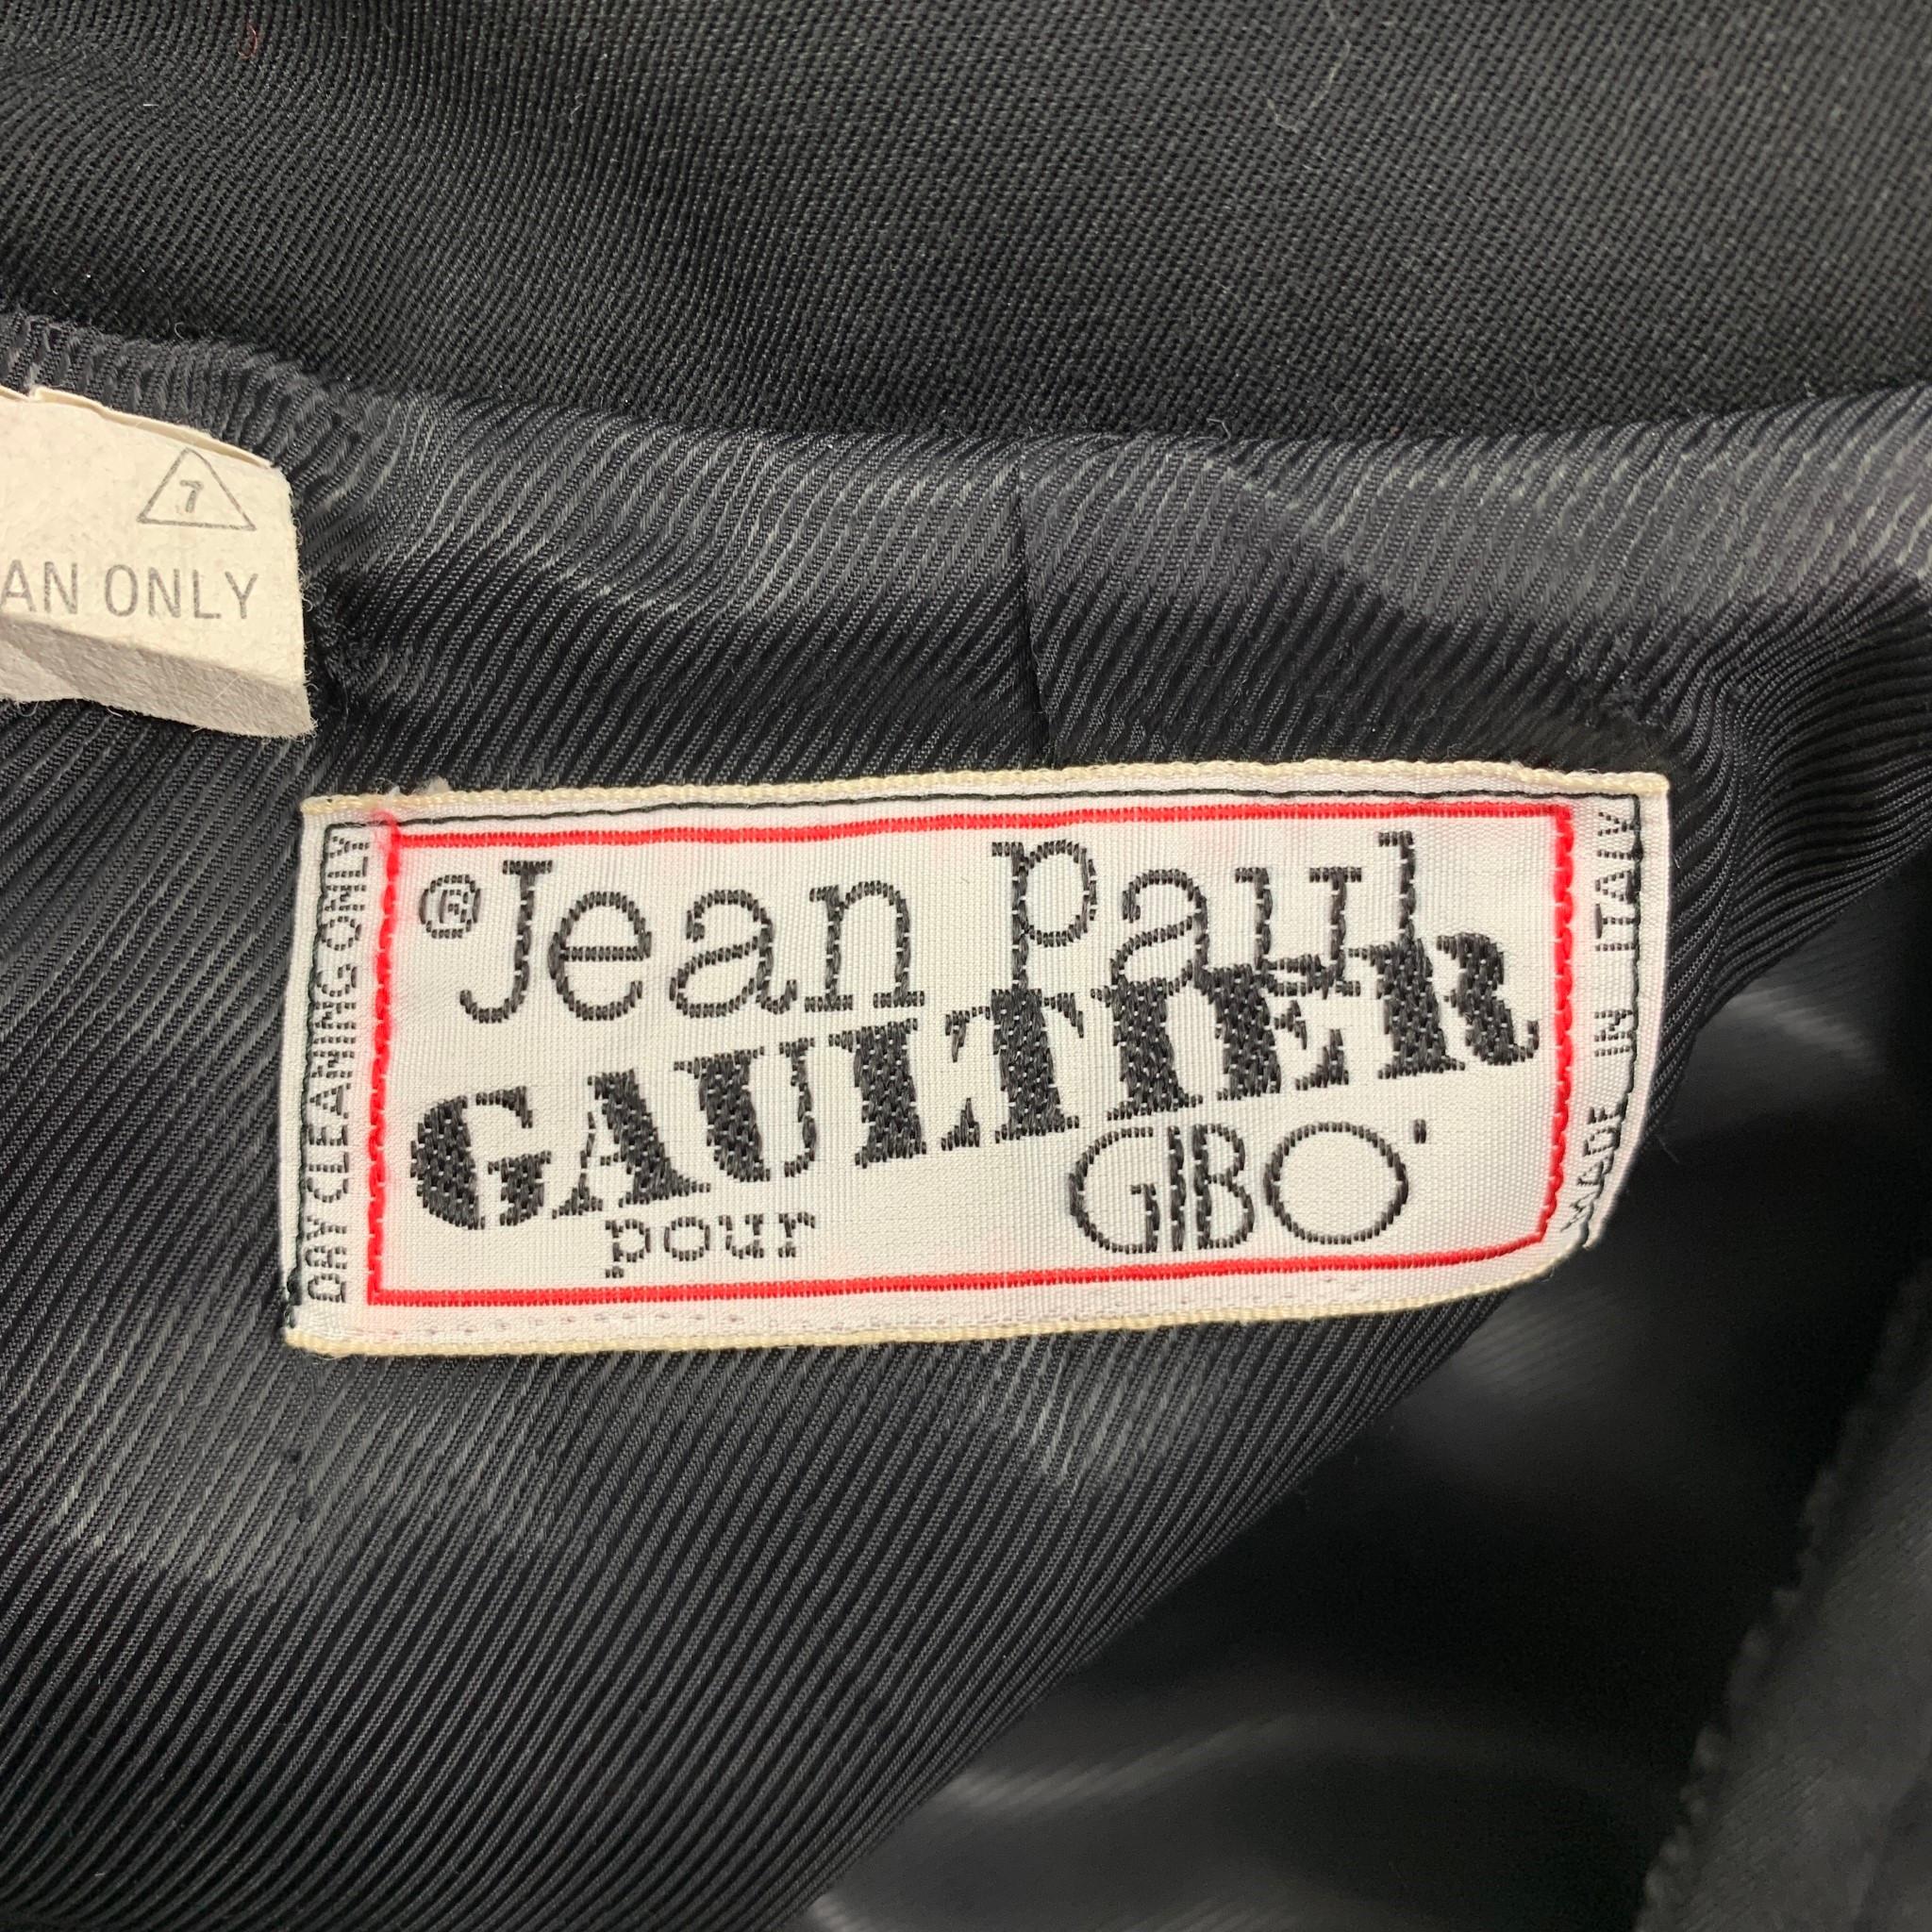 jean paul gaultier tag